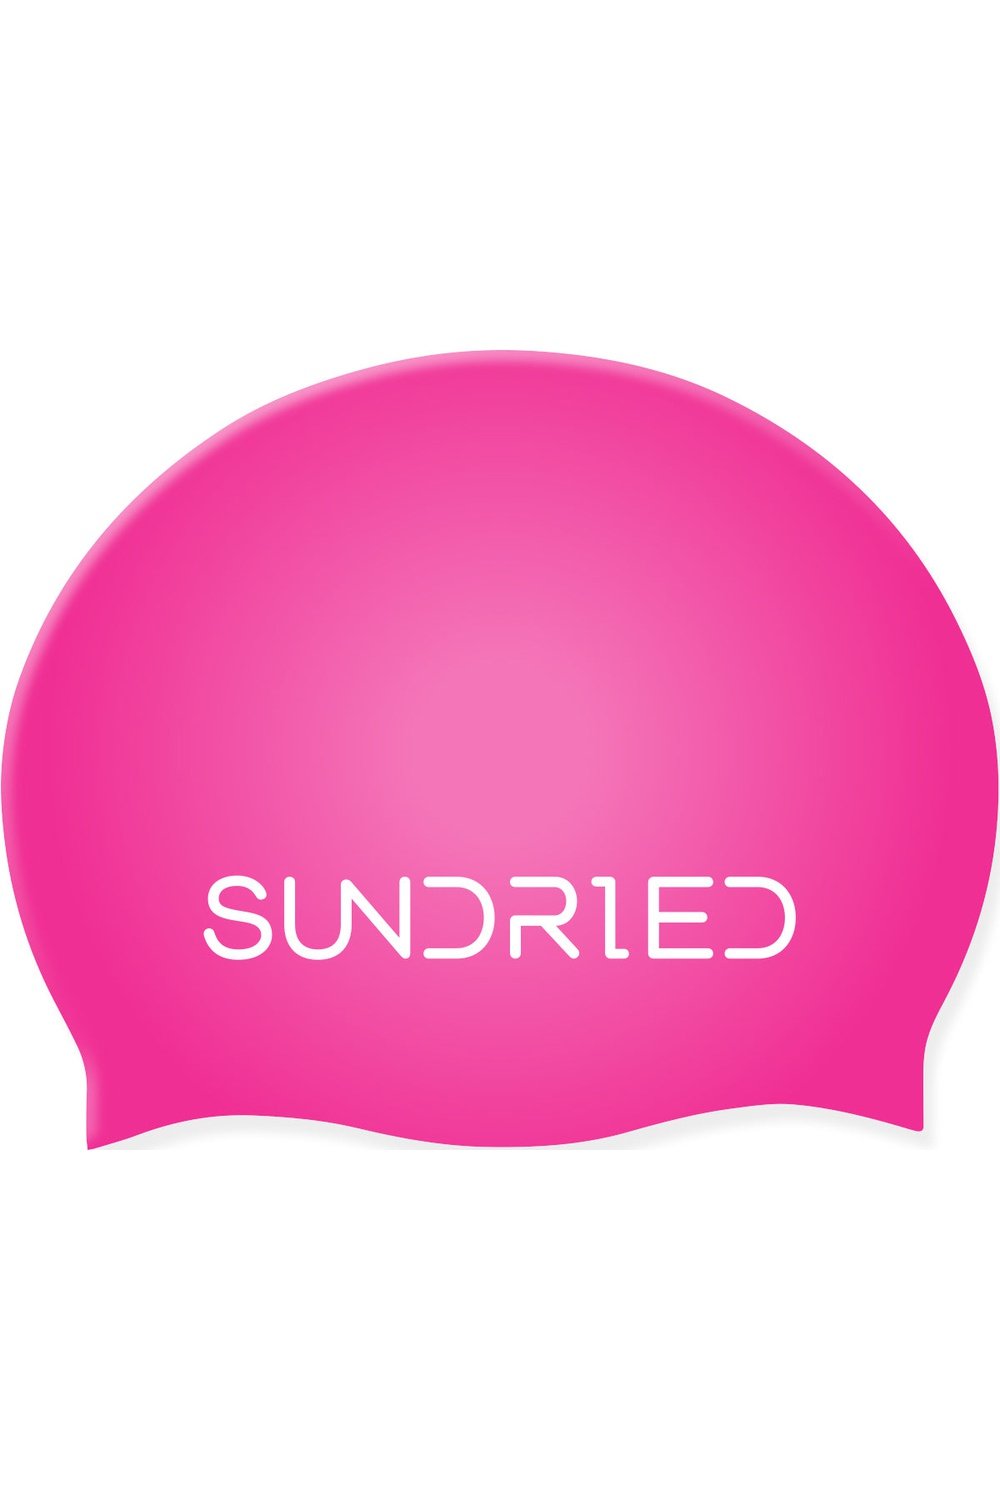 Sundried Swim Hat Accessories Pink SD0111 Pink Activewear